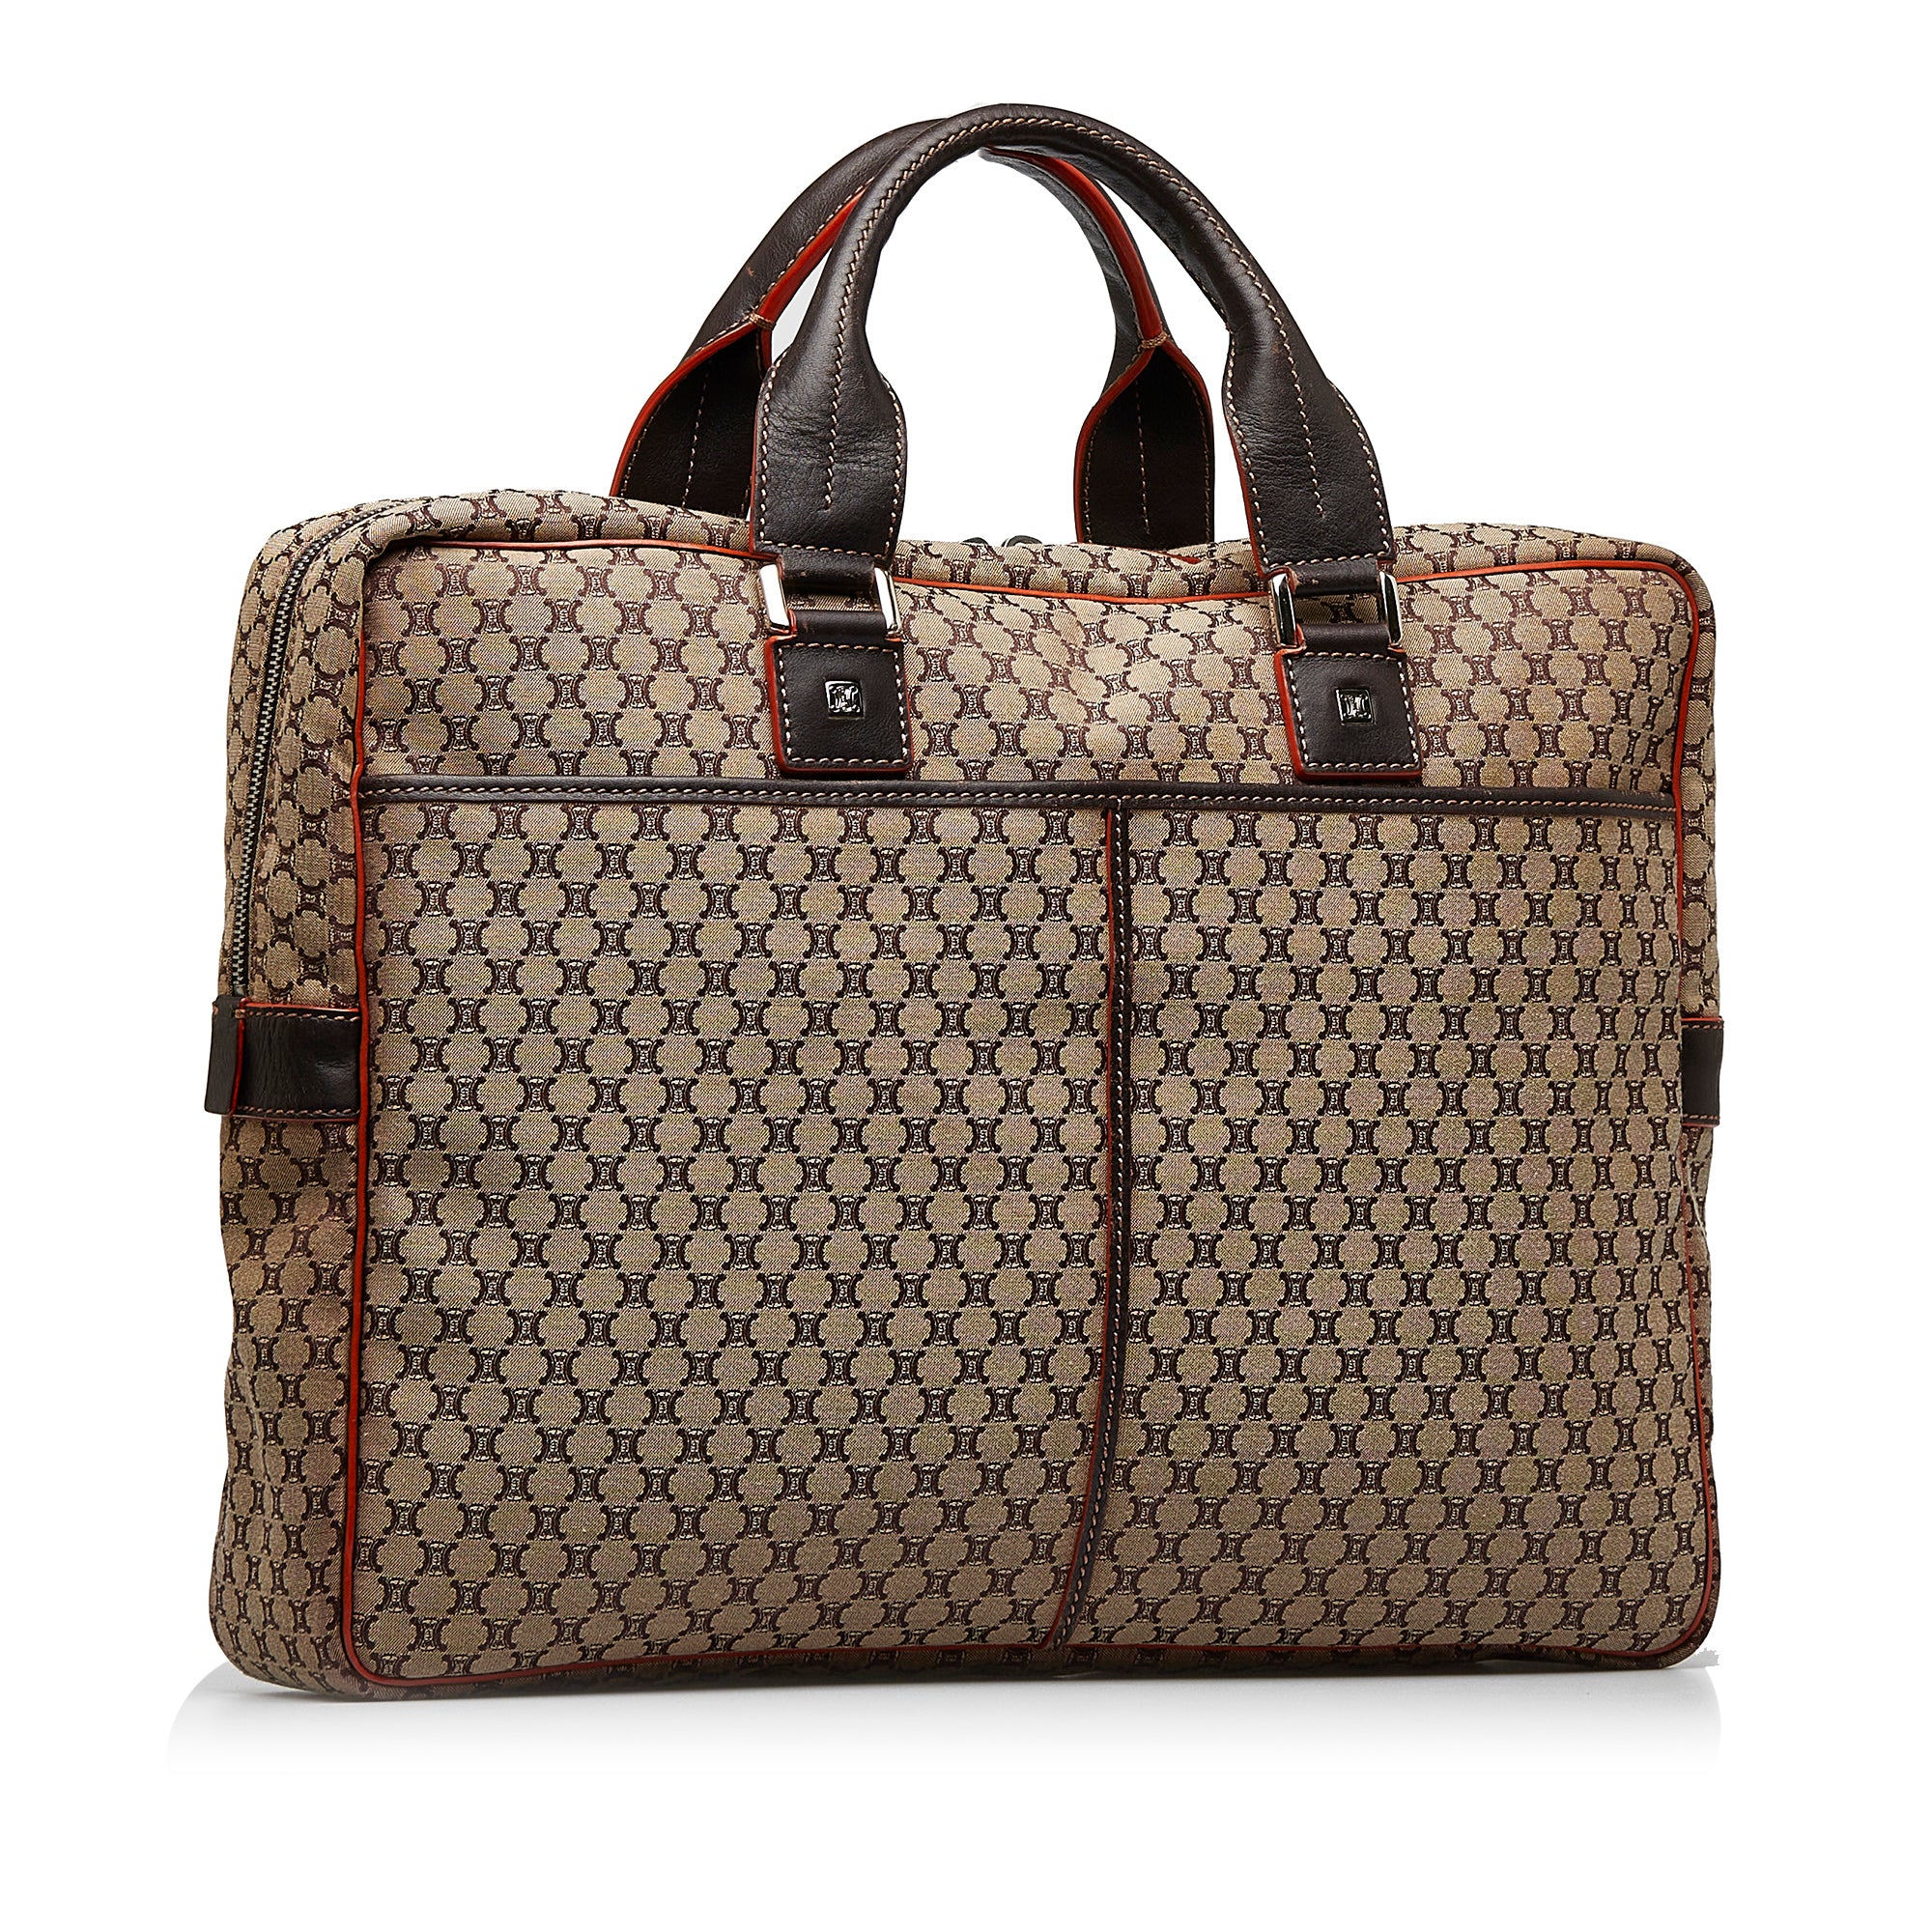 Gucci-Louis-Vuitton-Prada-Dior-LV-Versace-Chanel-Fendi-Coach-Cartier-Ysl-Tote  Fashion Shopping Bags Factory in China - China Handbags and Bags price